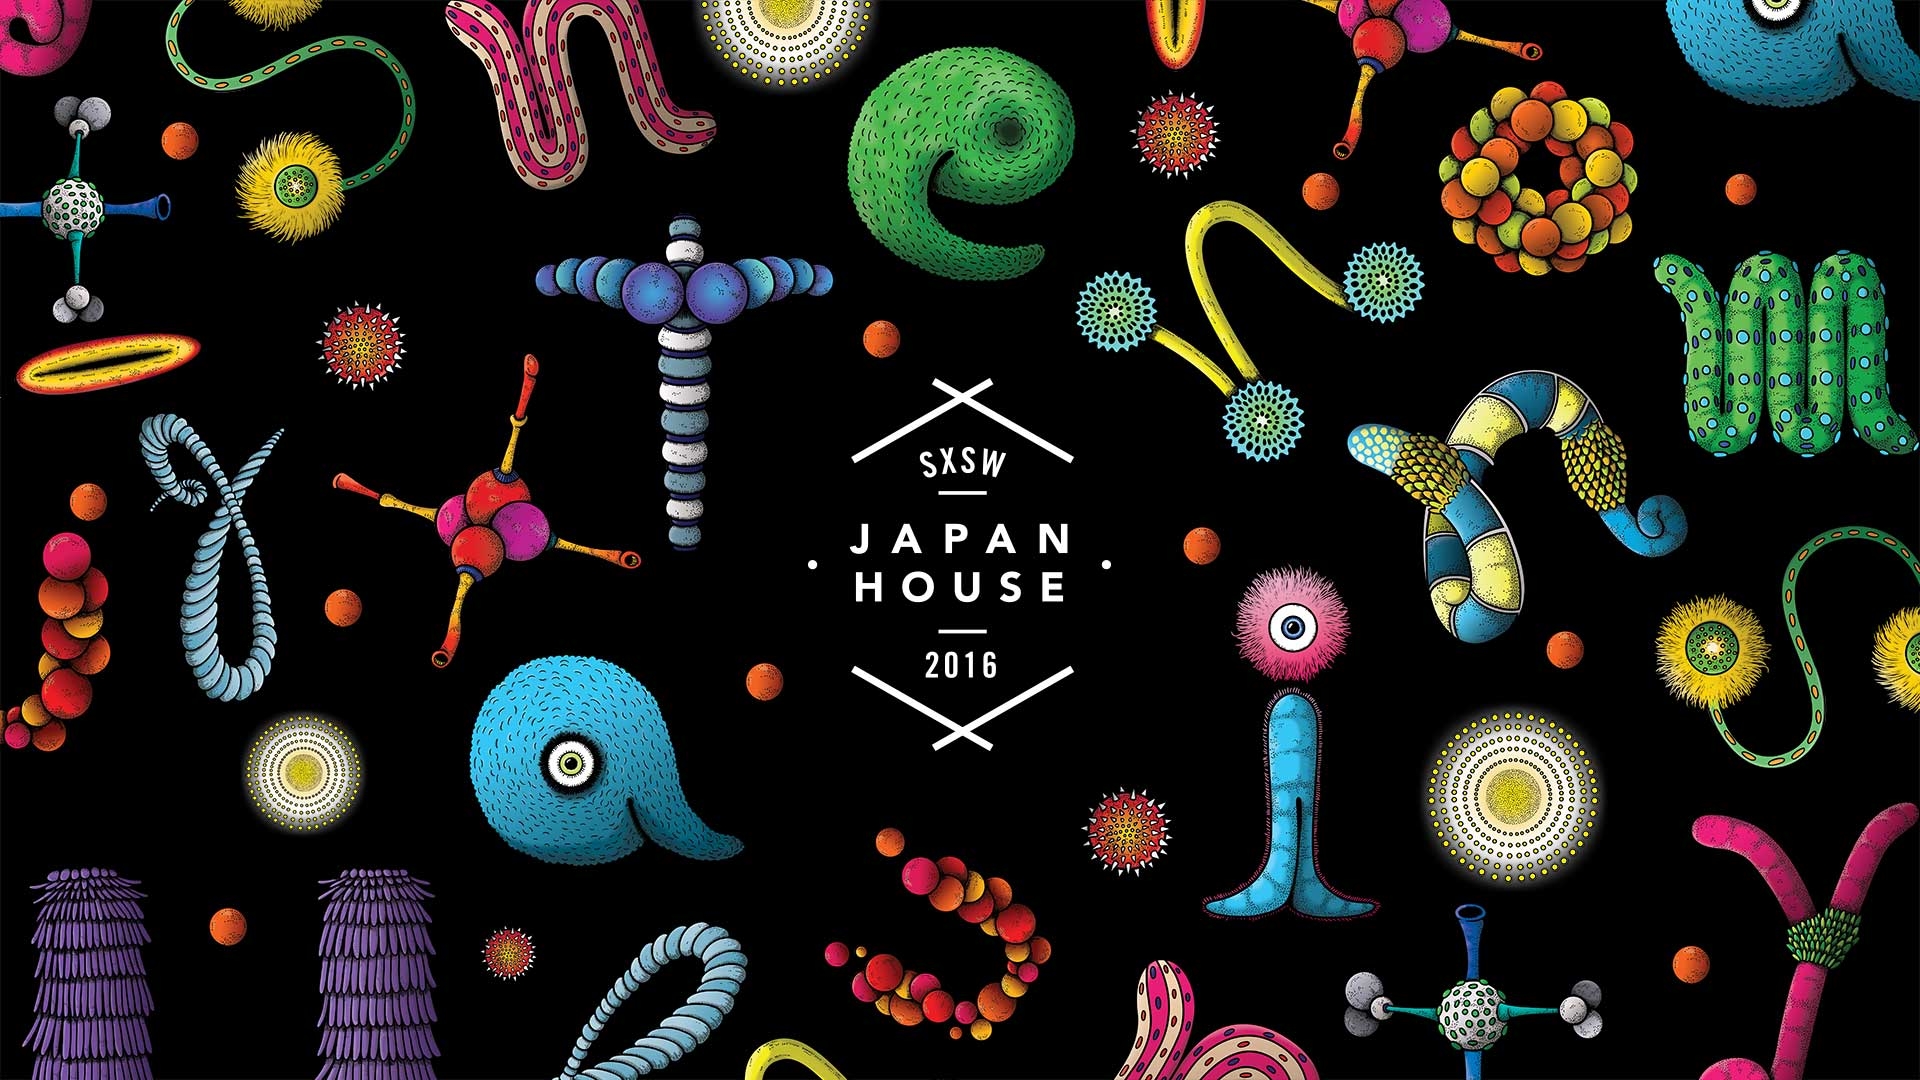 Sxsw 2016 Japan House Yuko Kondo Projects Debut Art